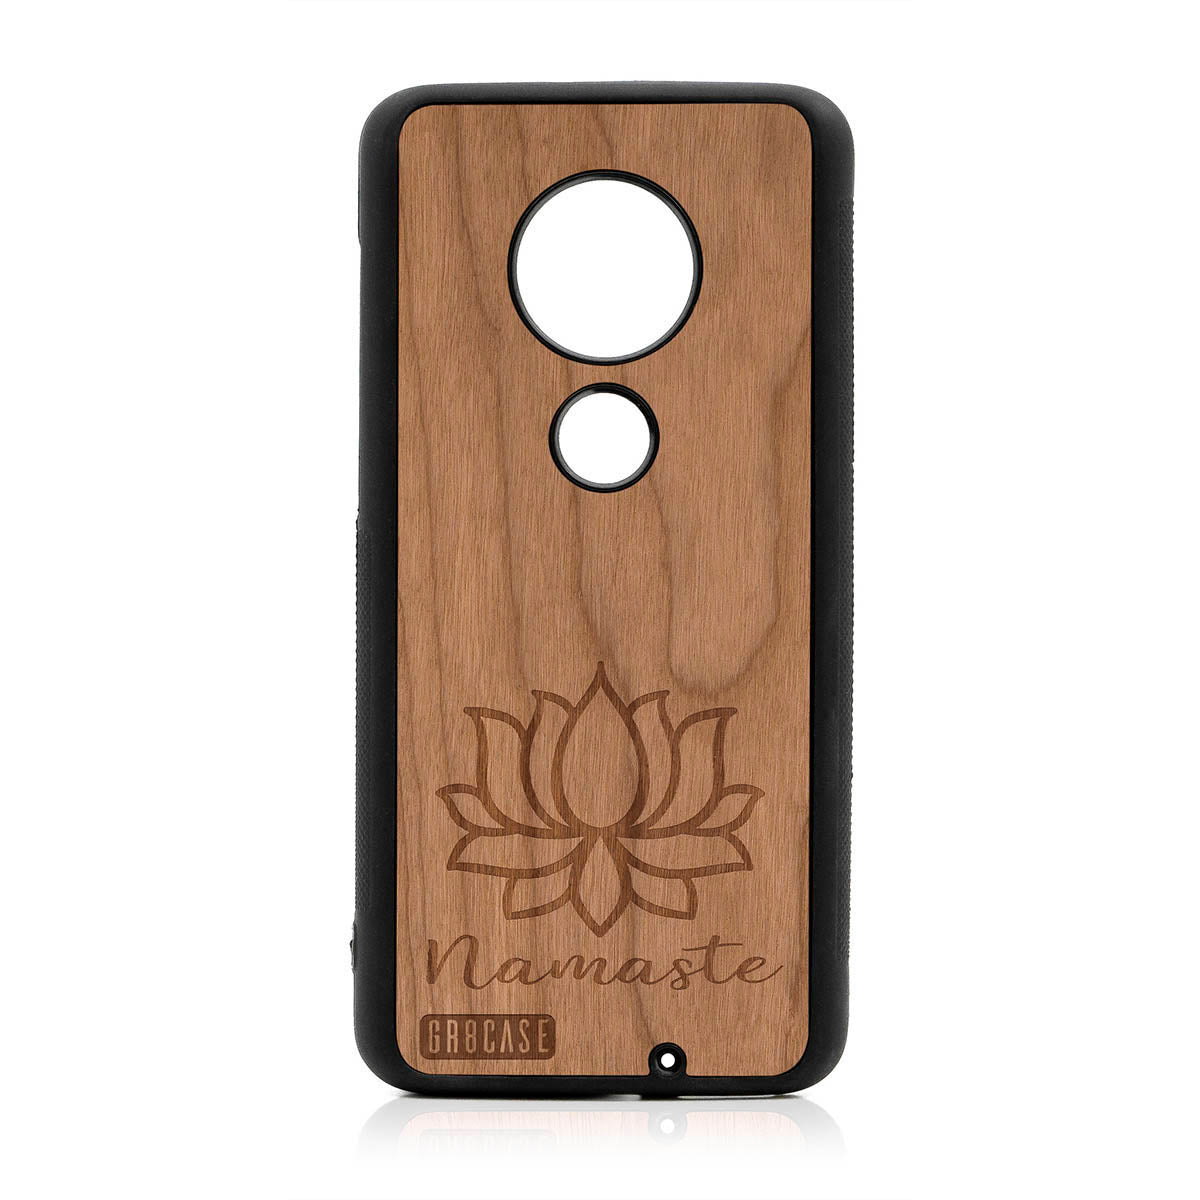 Namaste (Lotus Flower) Design Wood Case For Moto G7 Plus